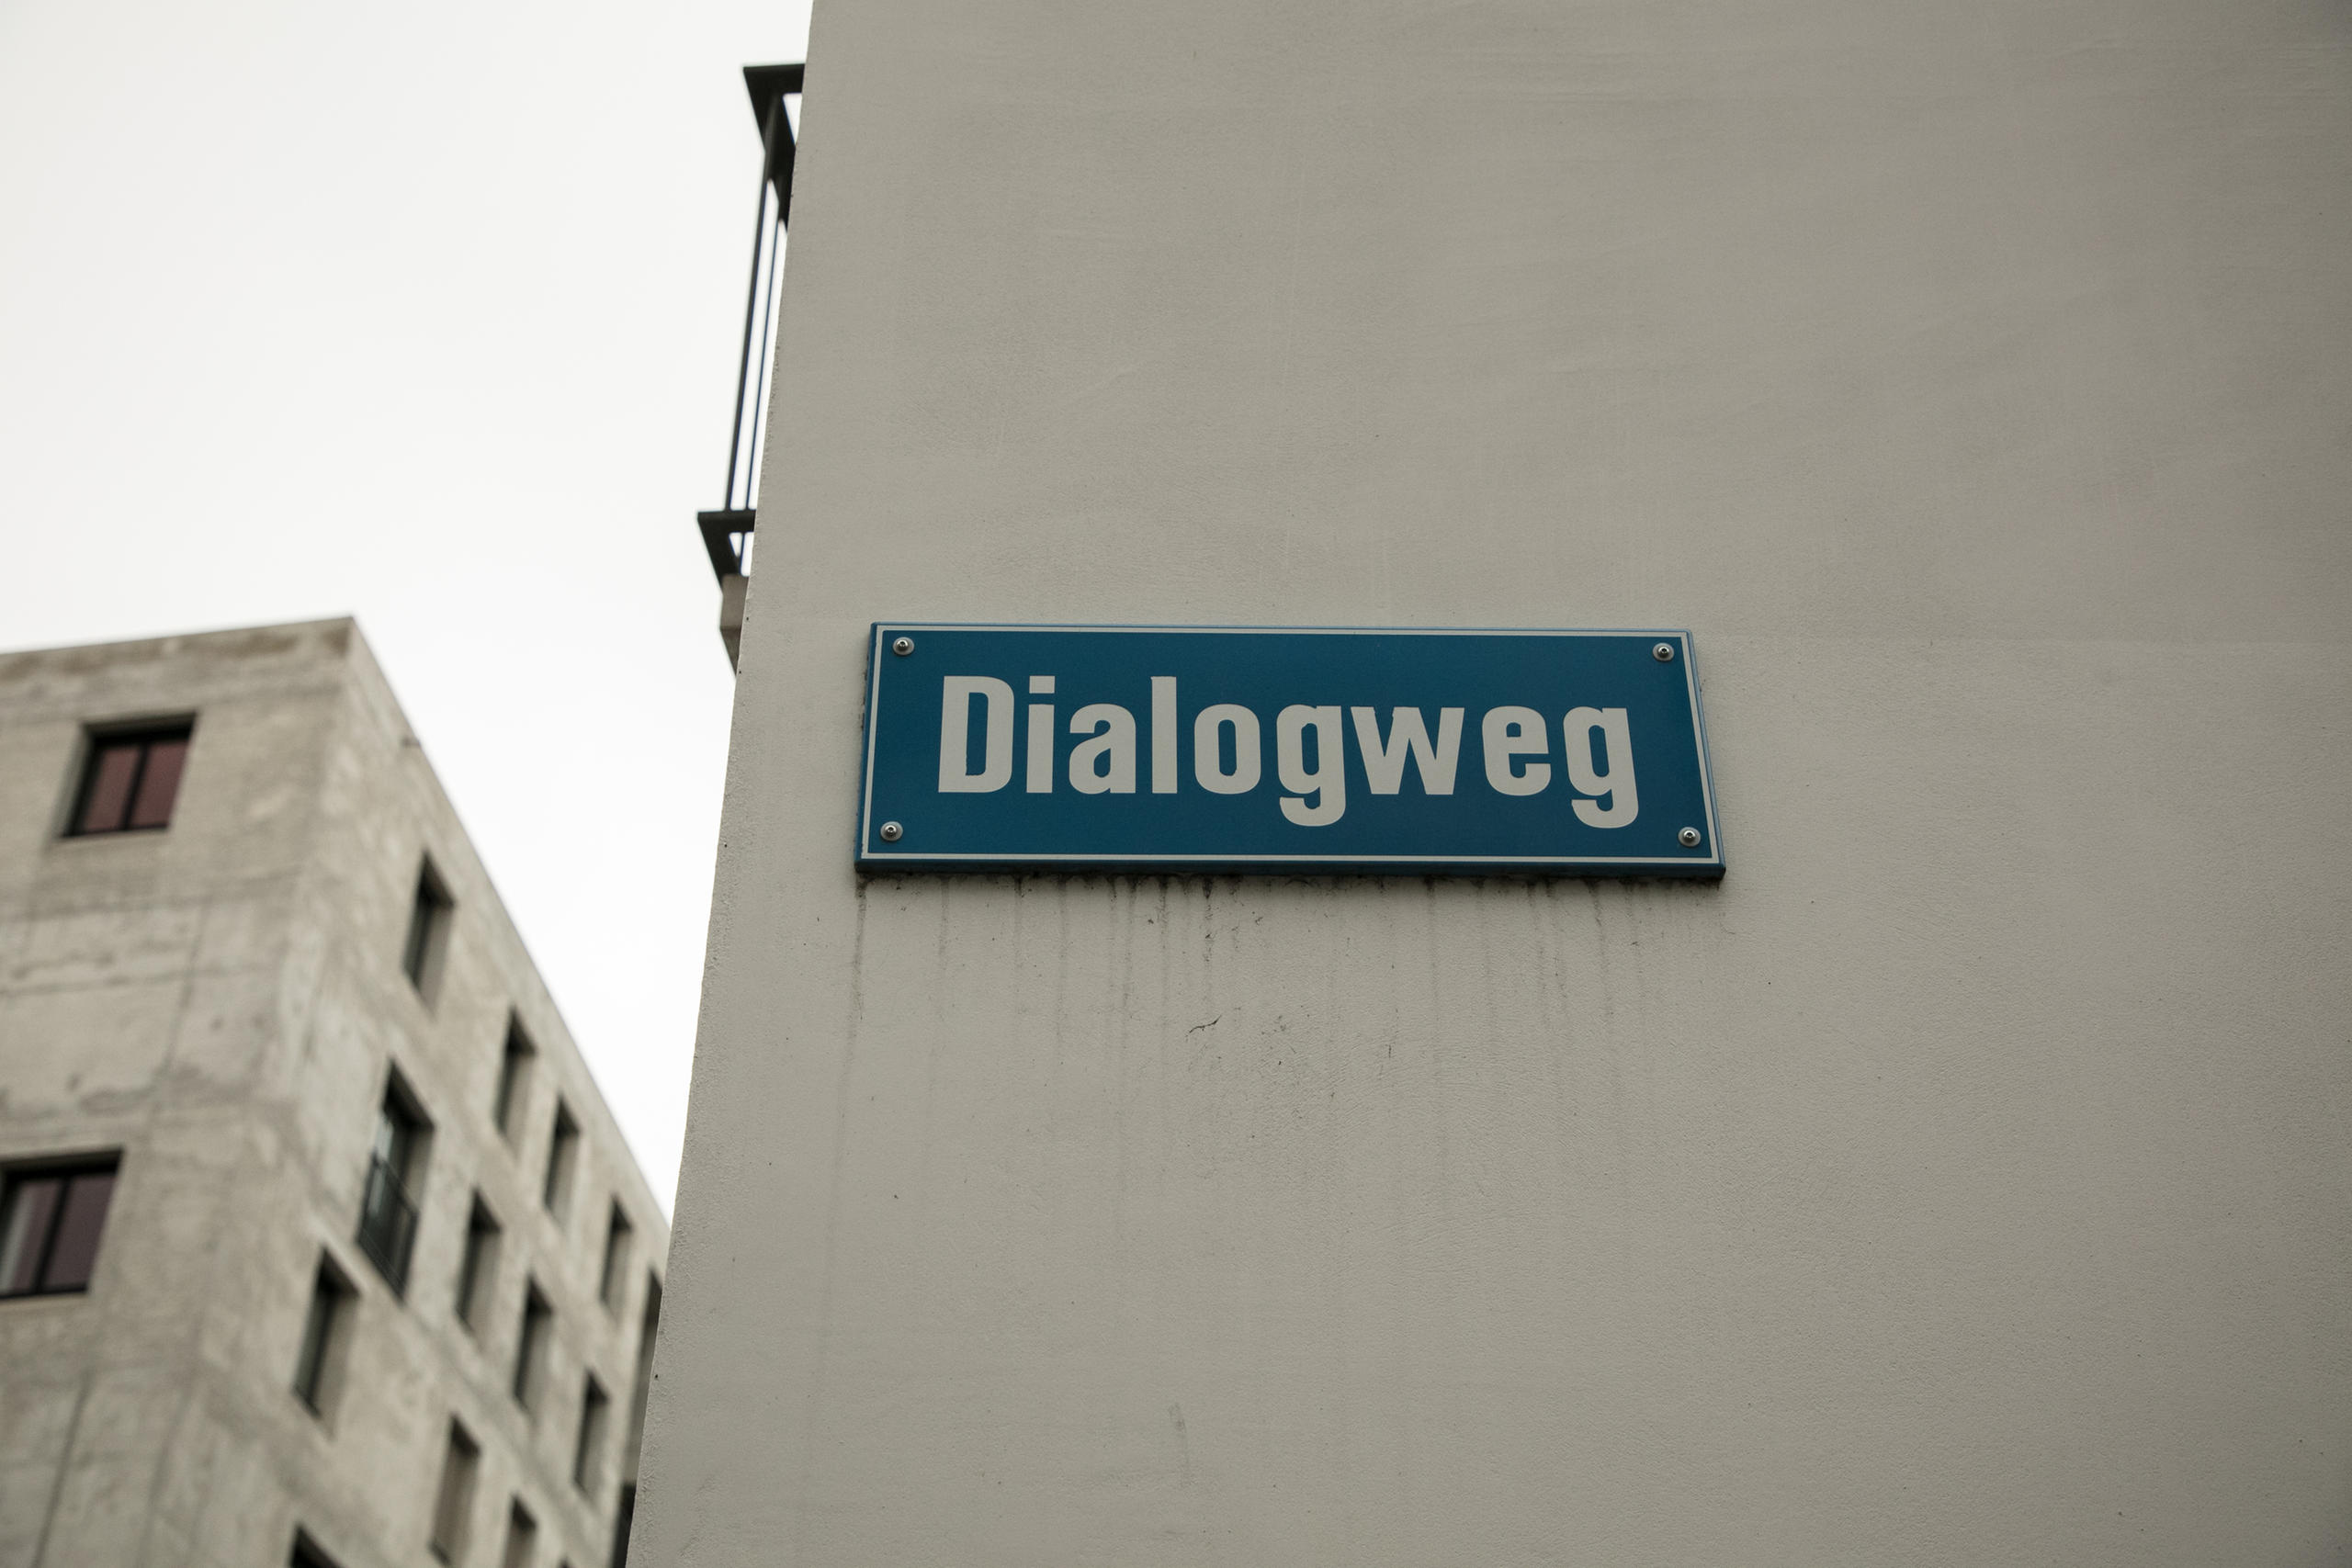 Placa de la calle Dialogweg